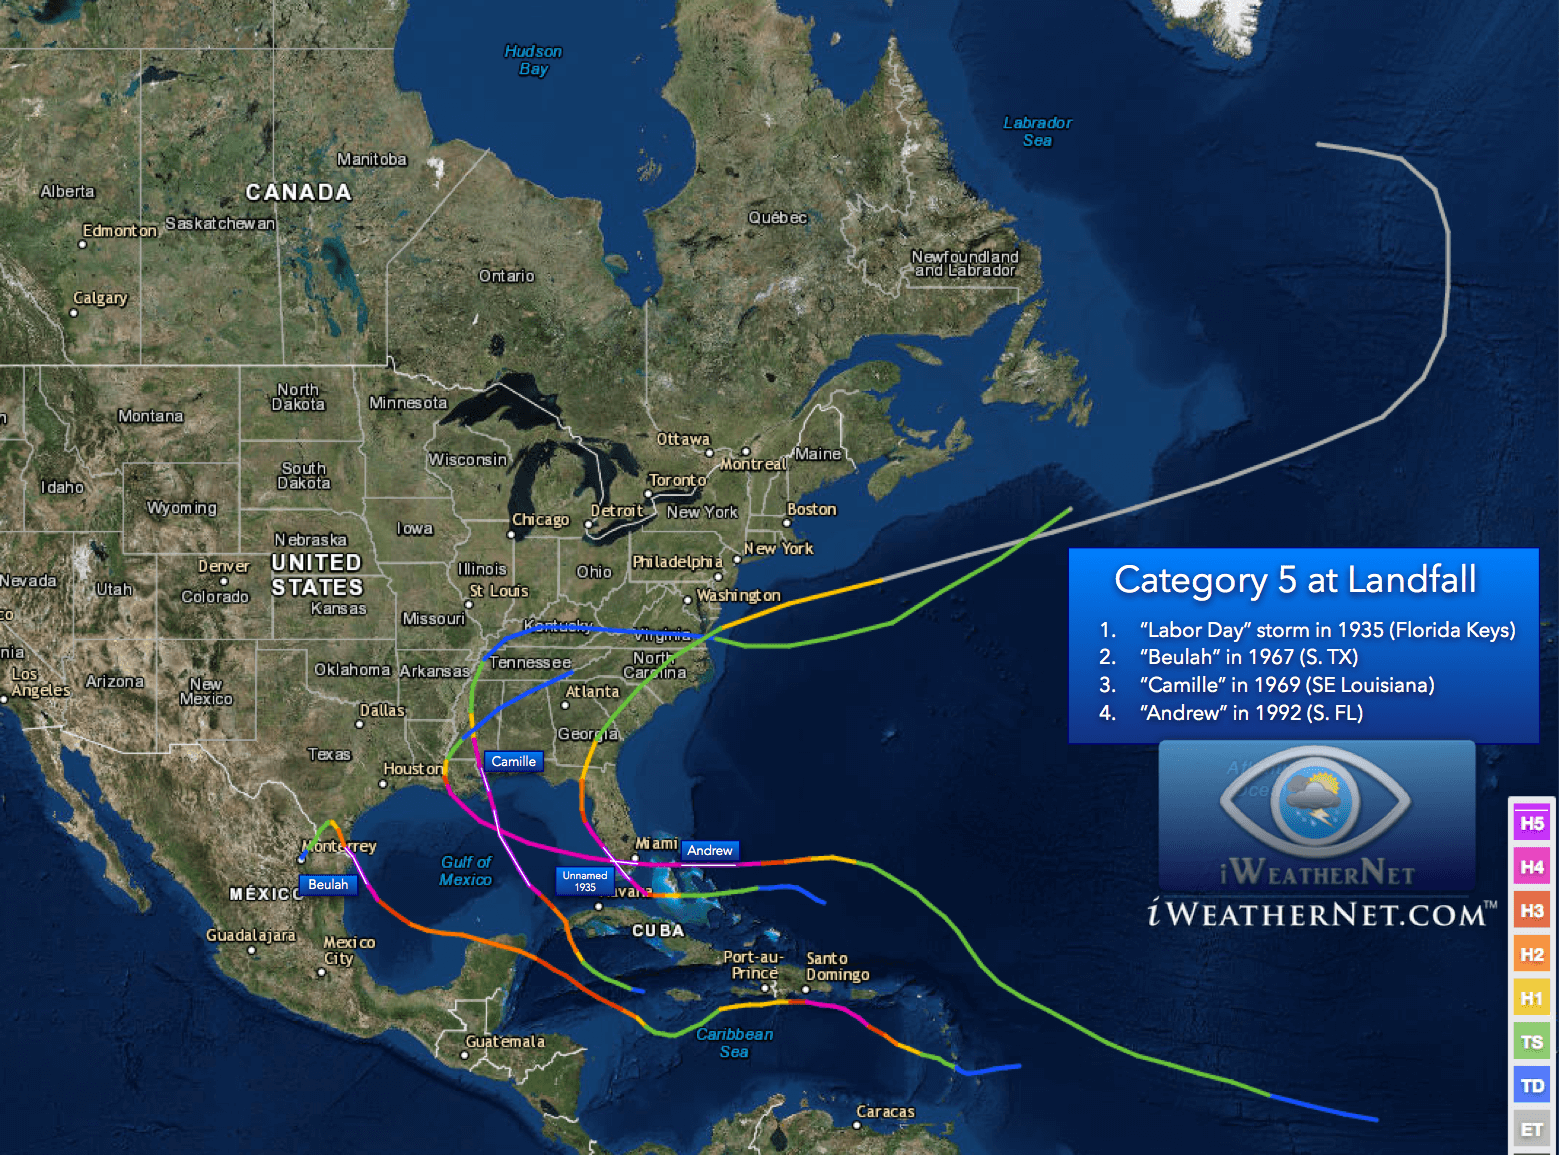 Category 5 hurricanes in the Atlantic Basin: Interesting statistics – iWeatherNet